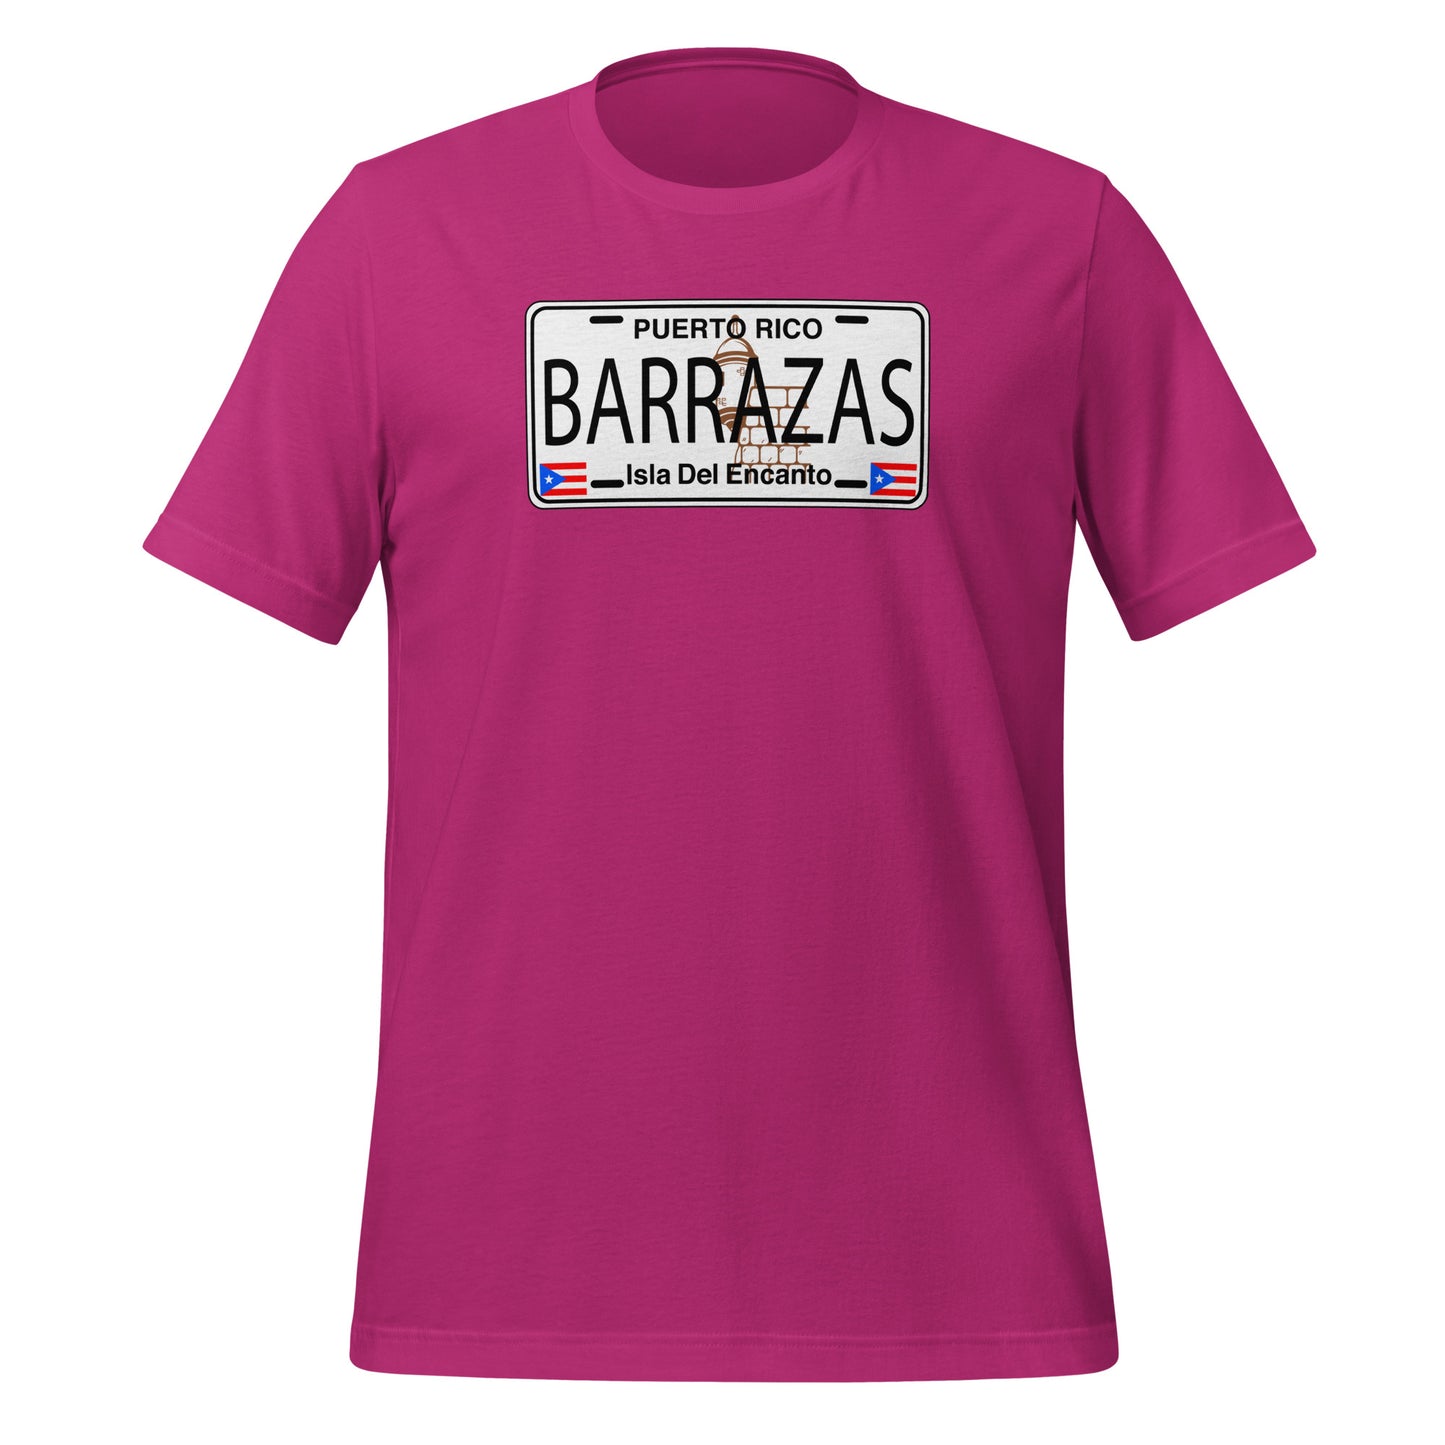 Barrazas Puerto Rico License Plate Unisex T-Shirt